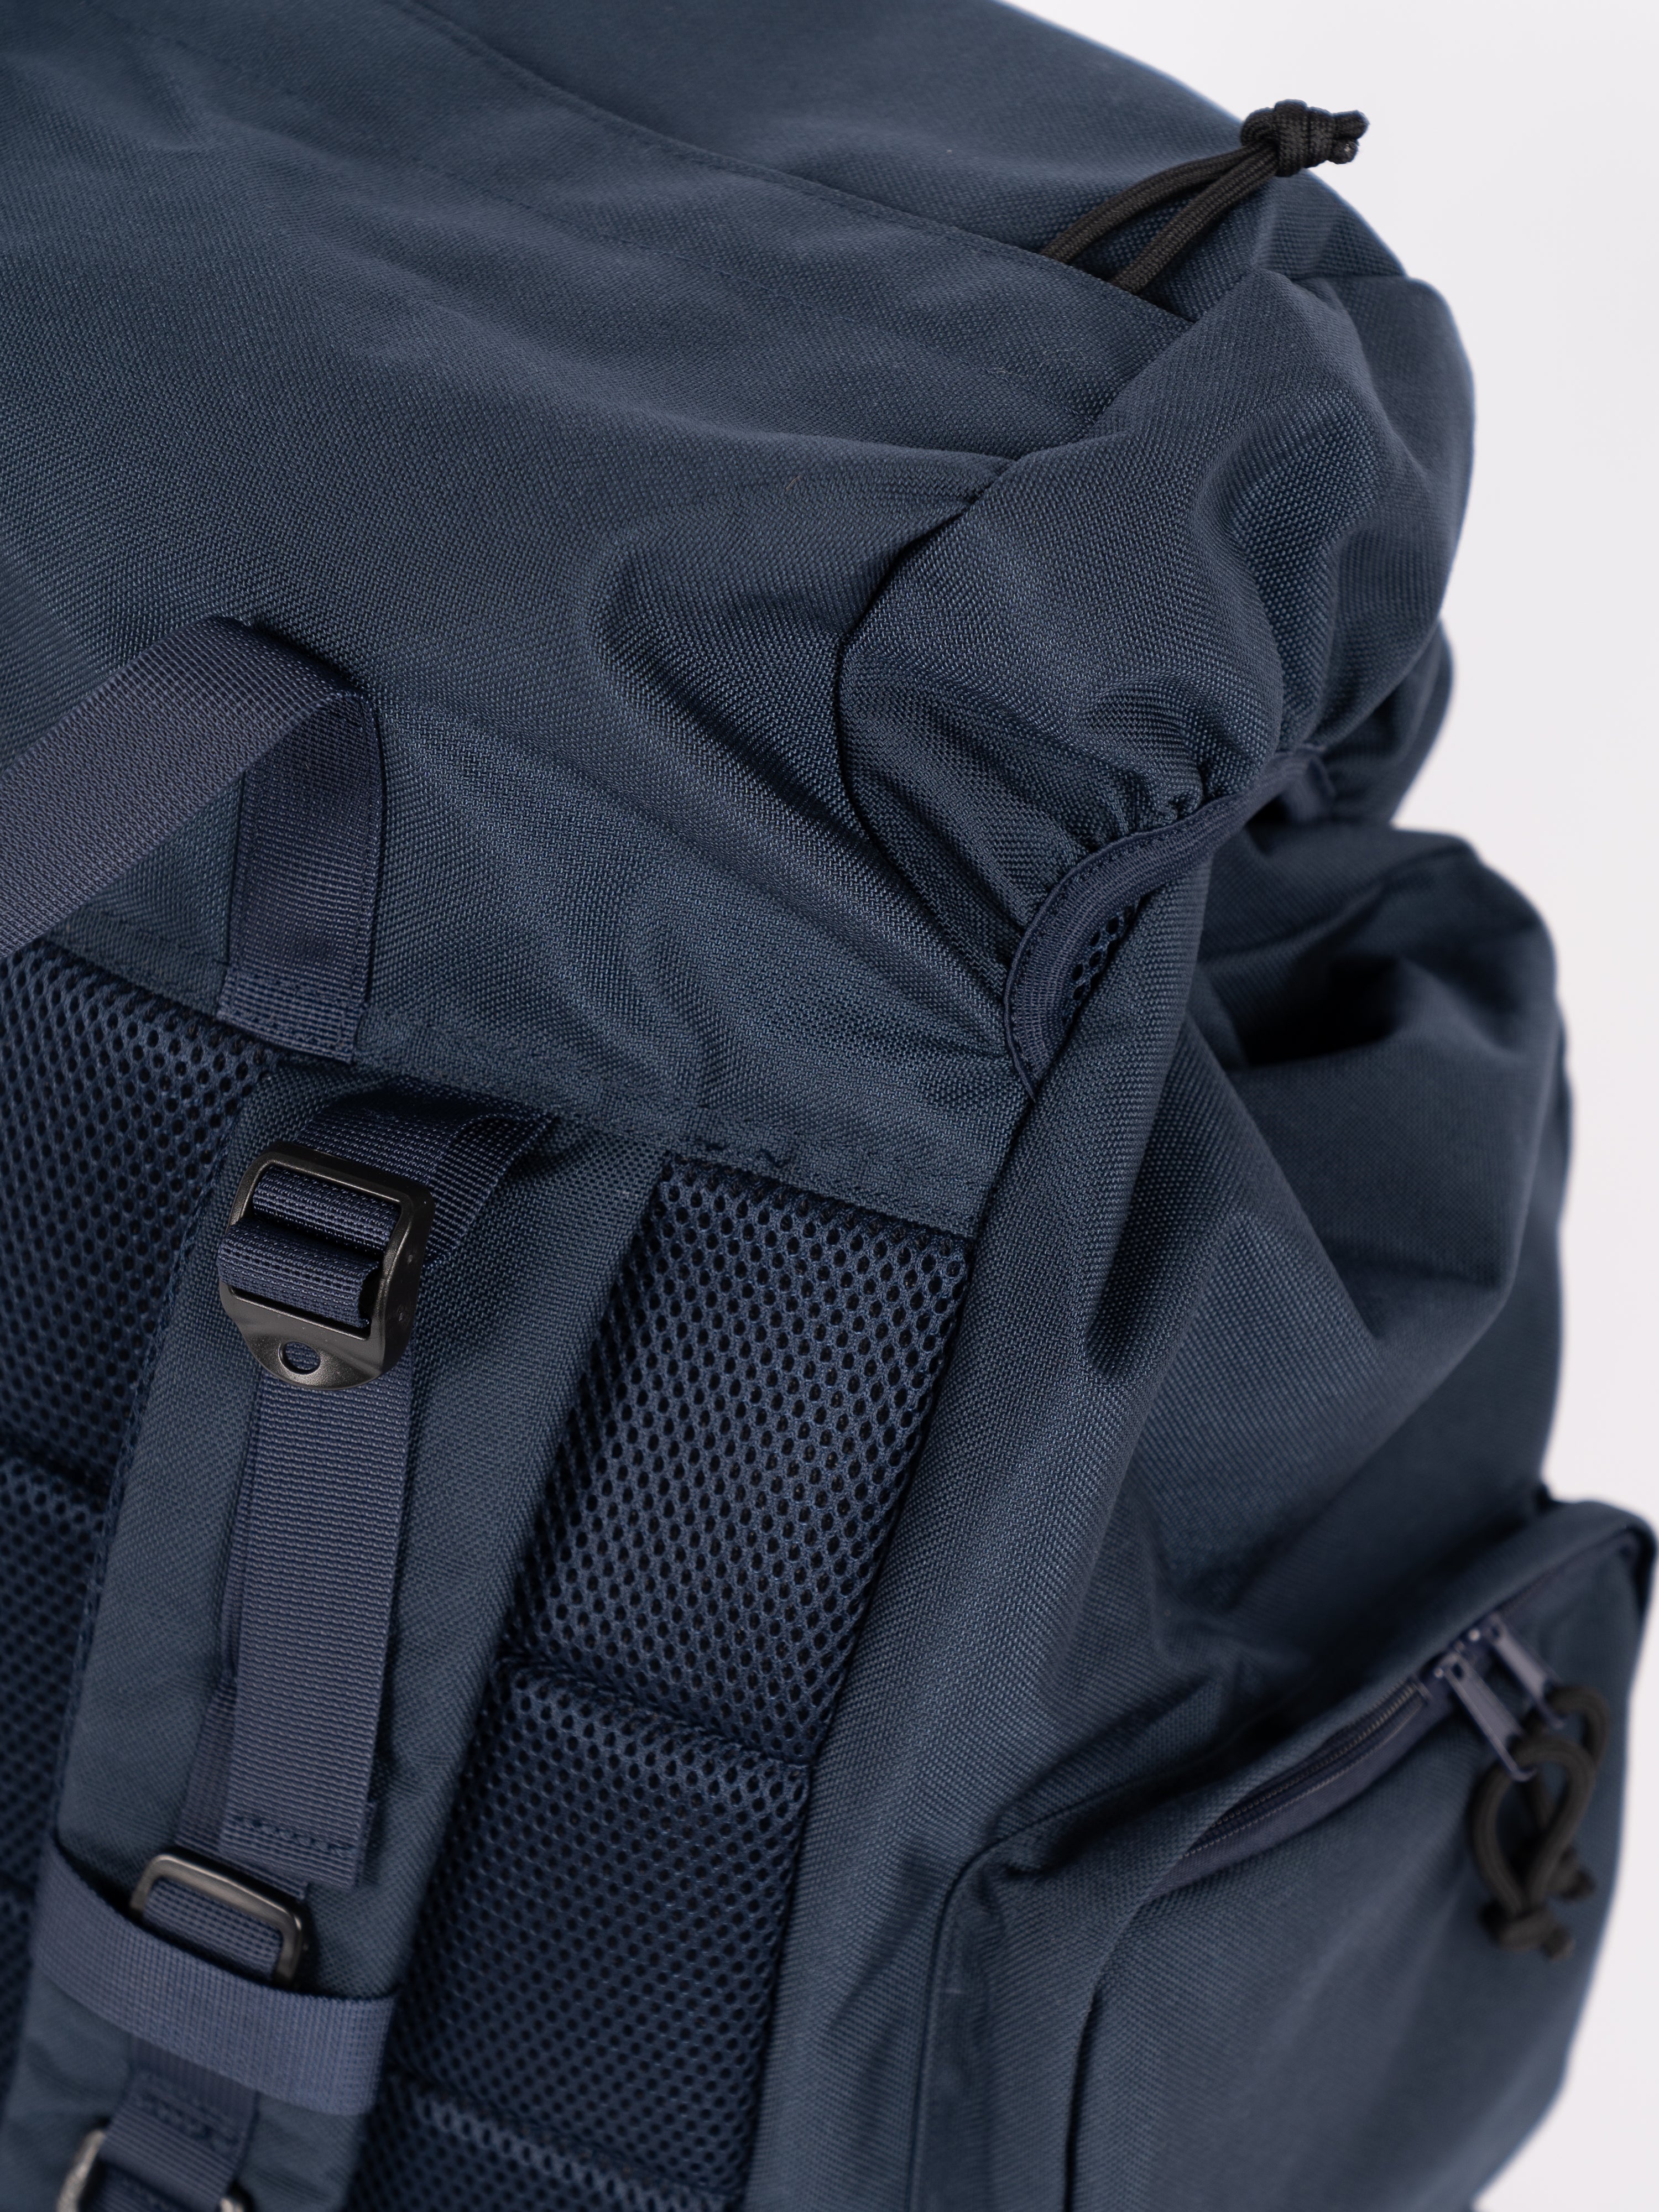 FreshService Utility Backpack (Navy)